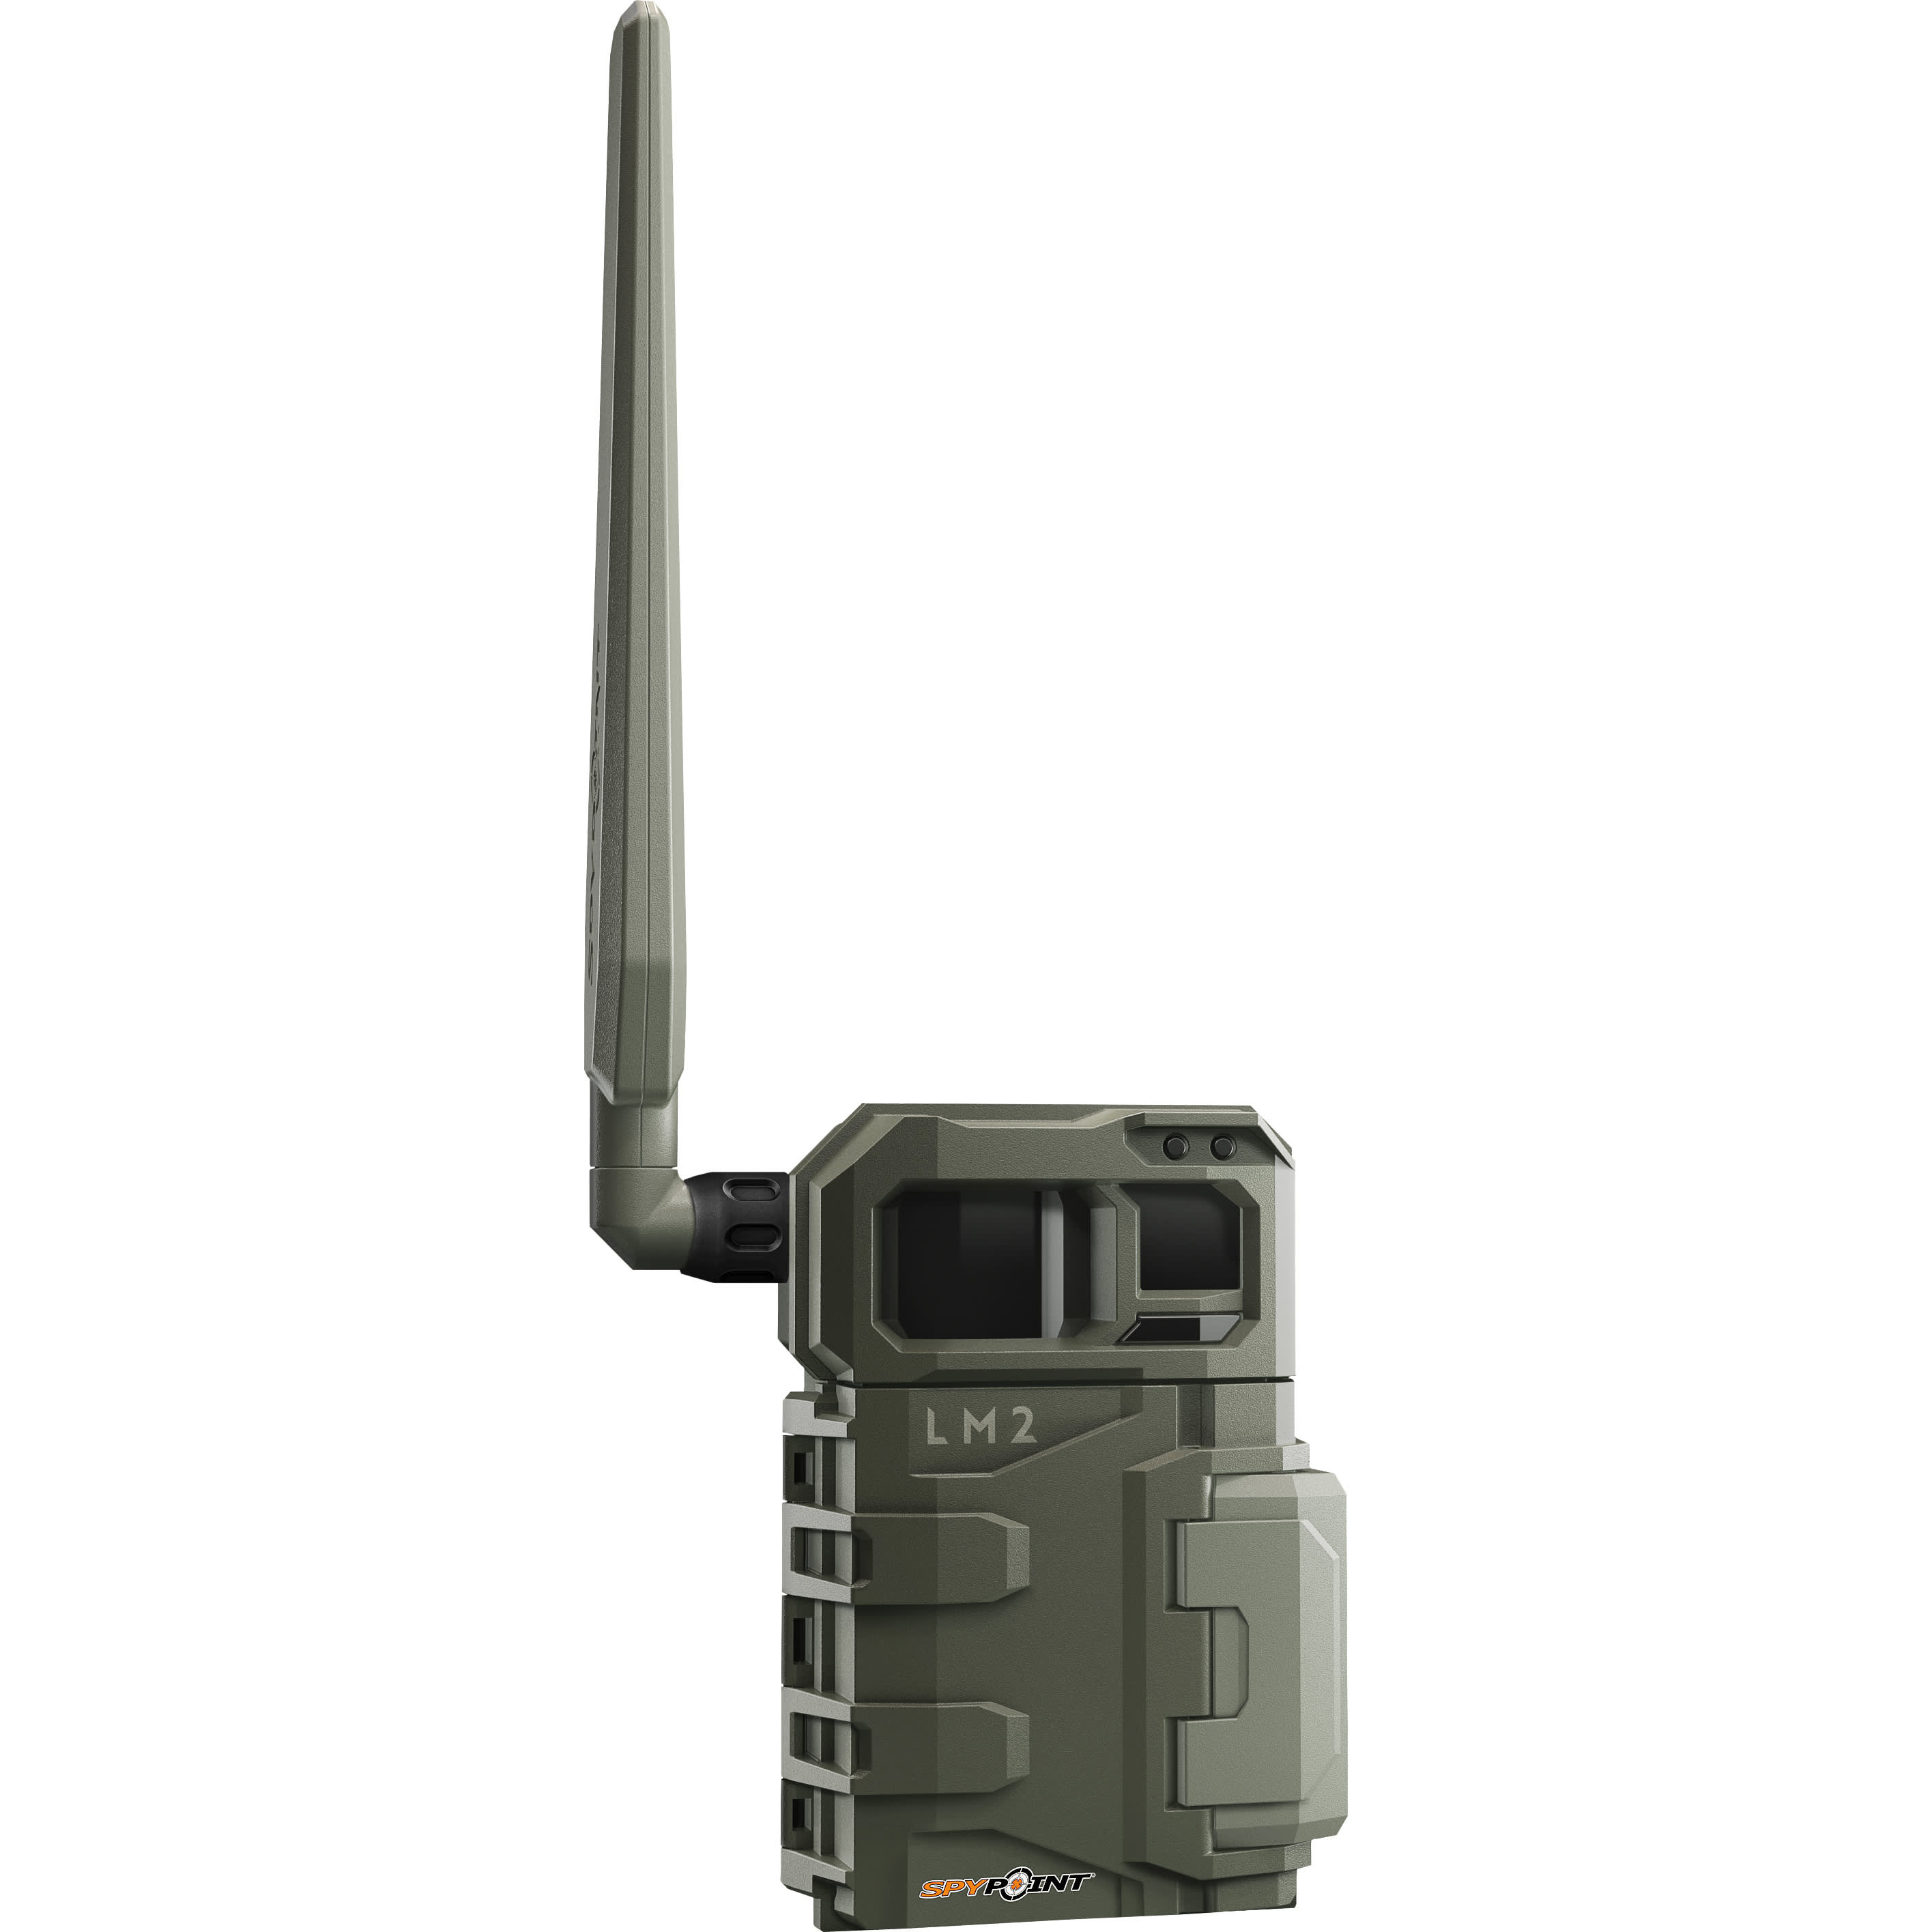 SPYPOINT® LM2 Cellular Trail Camera